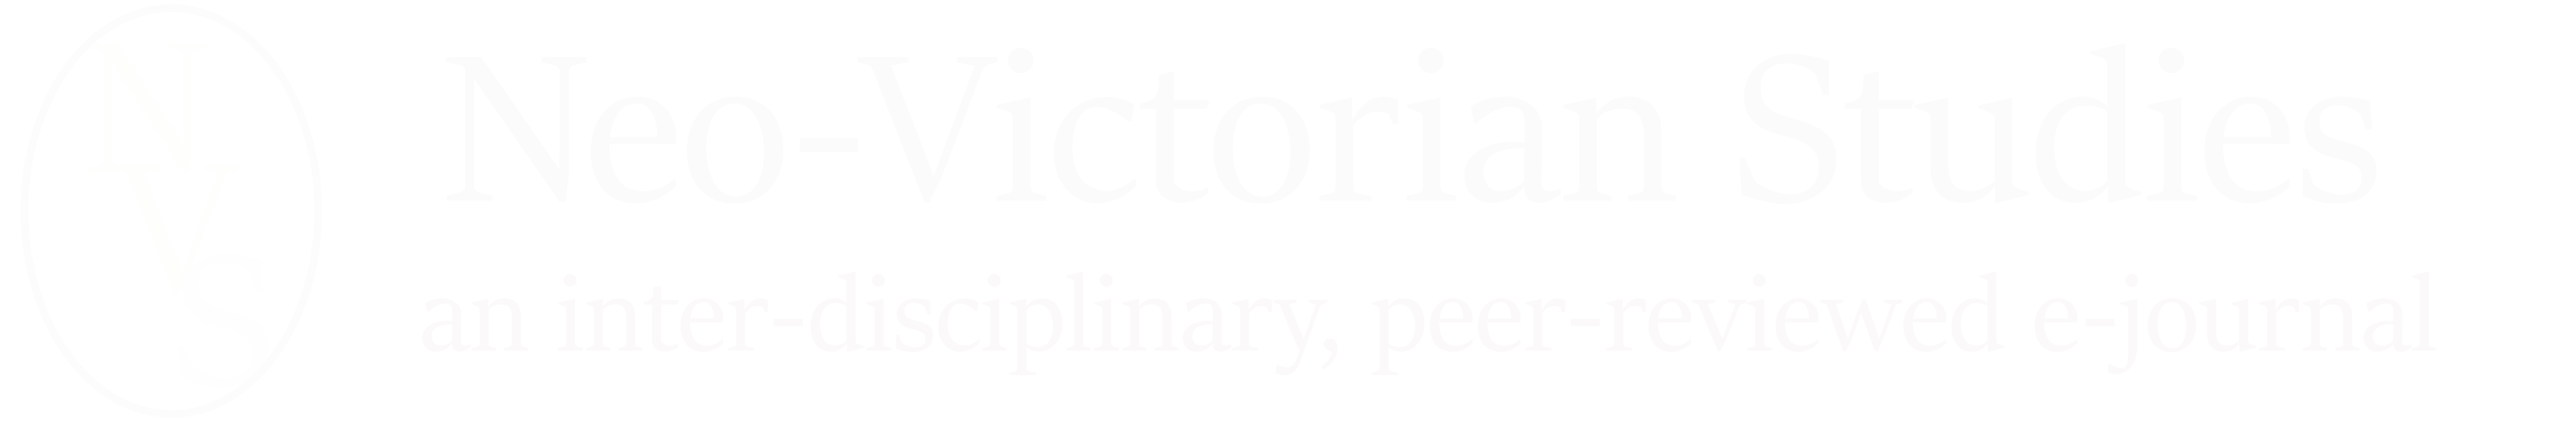 White text on transparent background 'Neo-Victorian Studies'